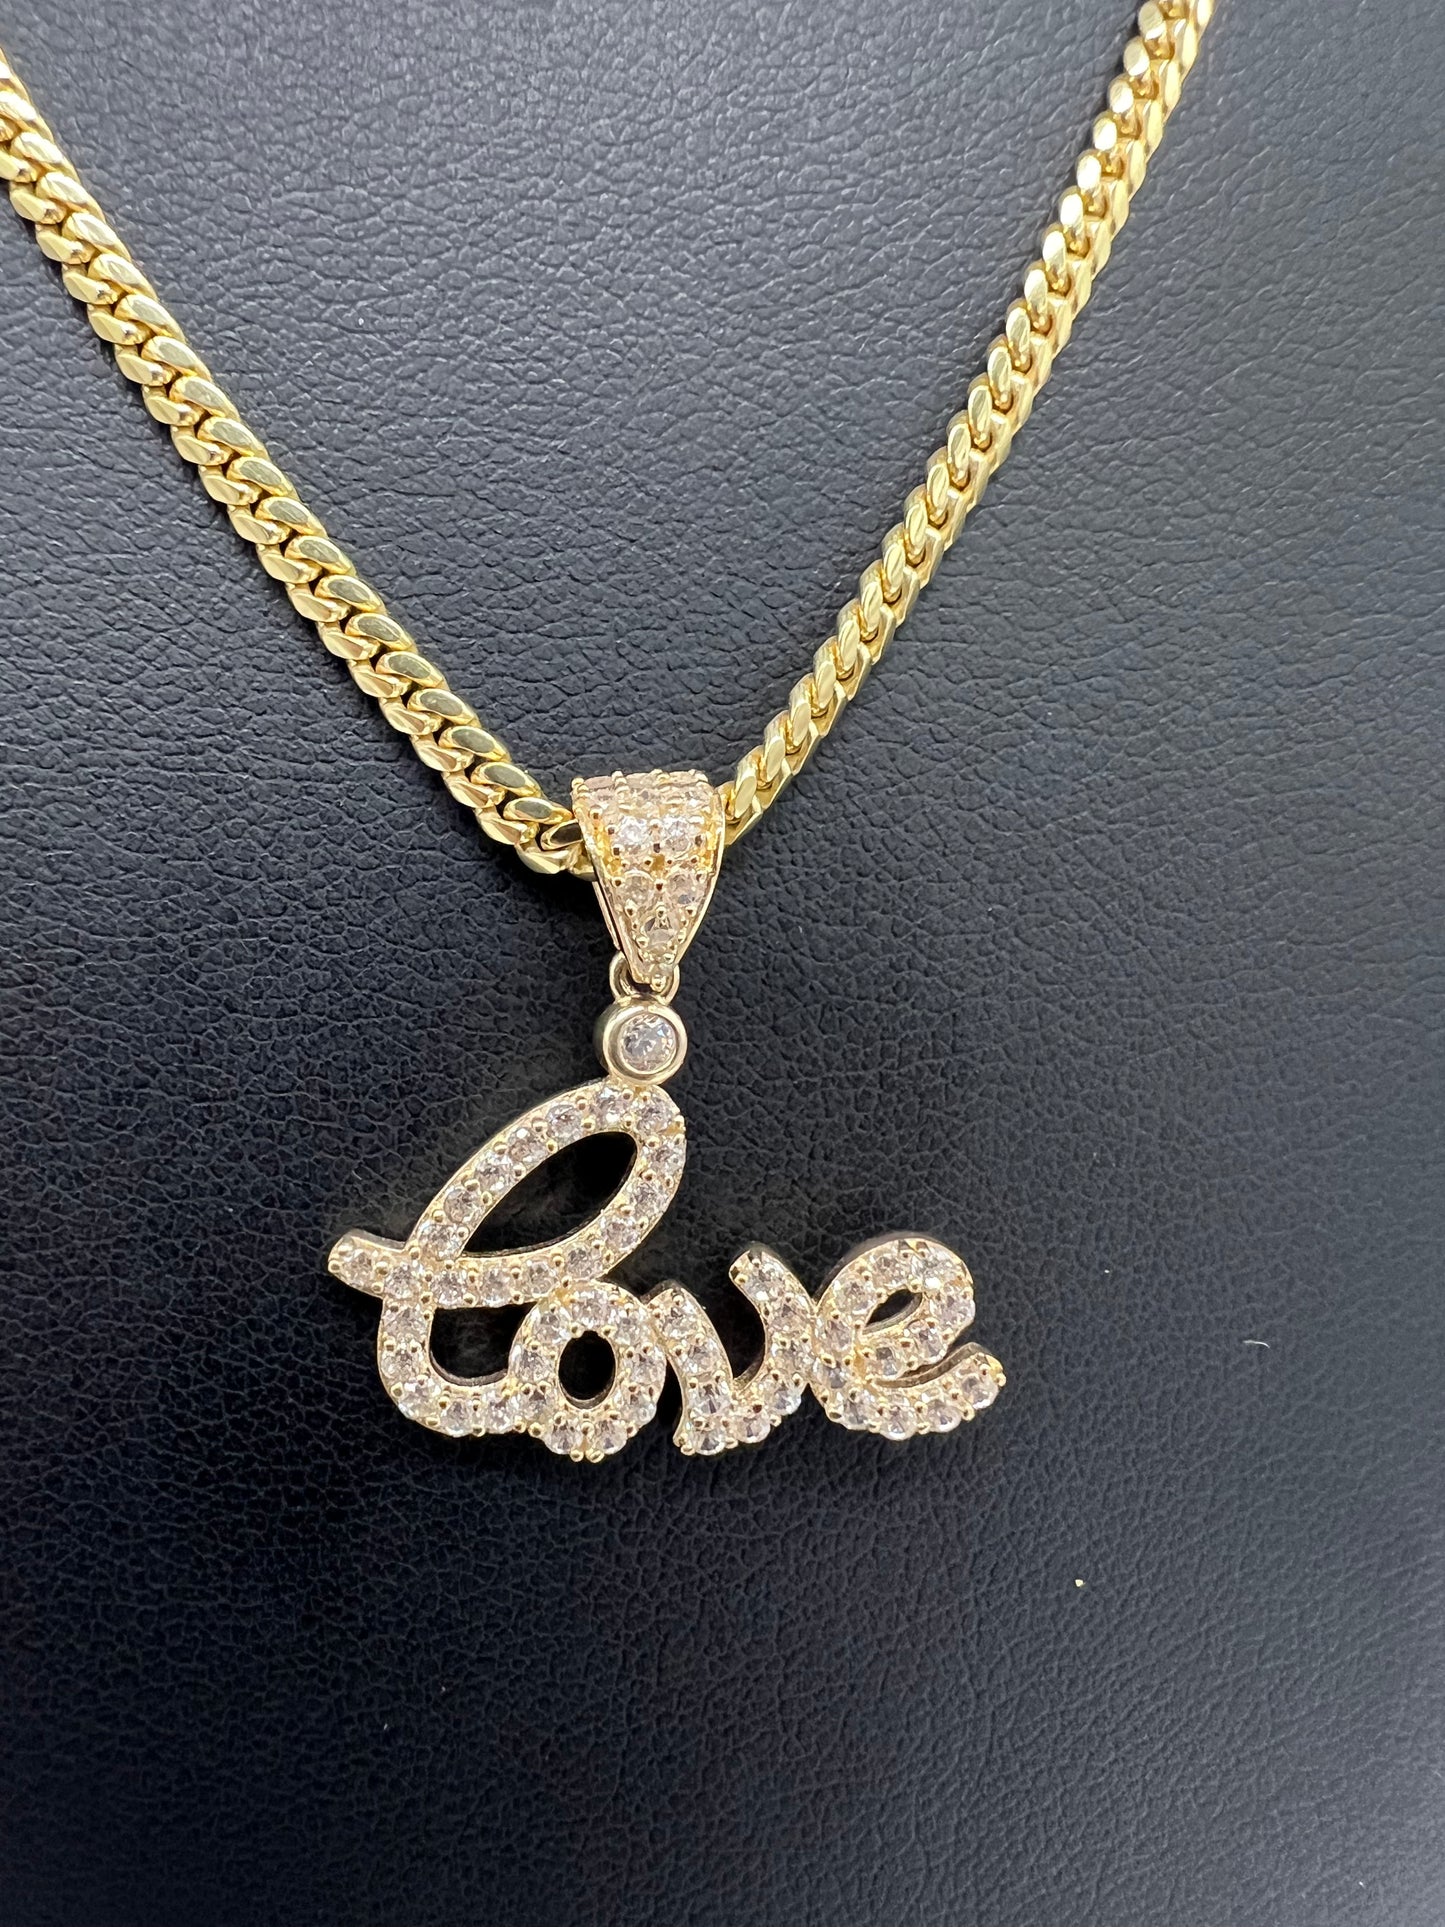 10k | “love” charm with Cuban link chain